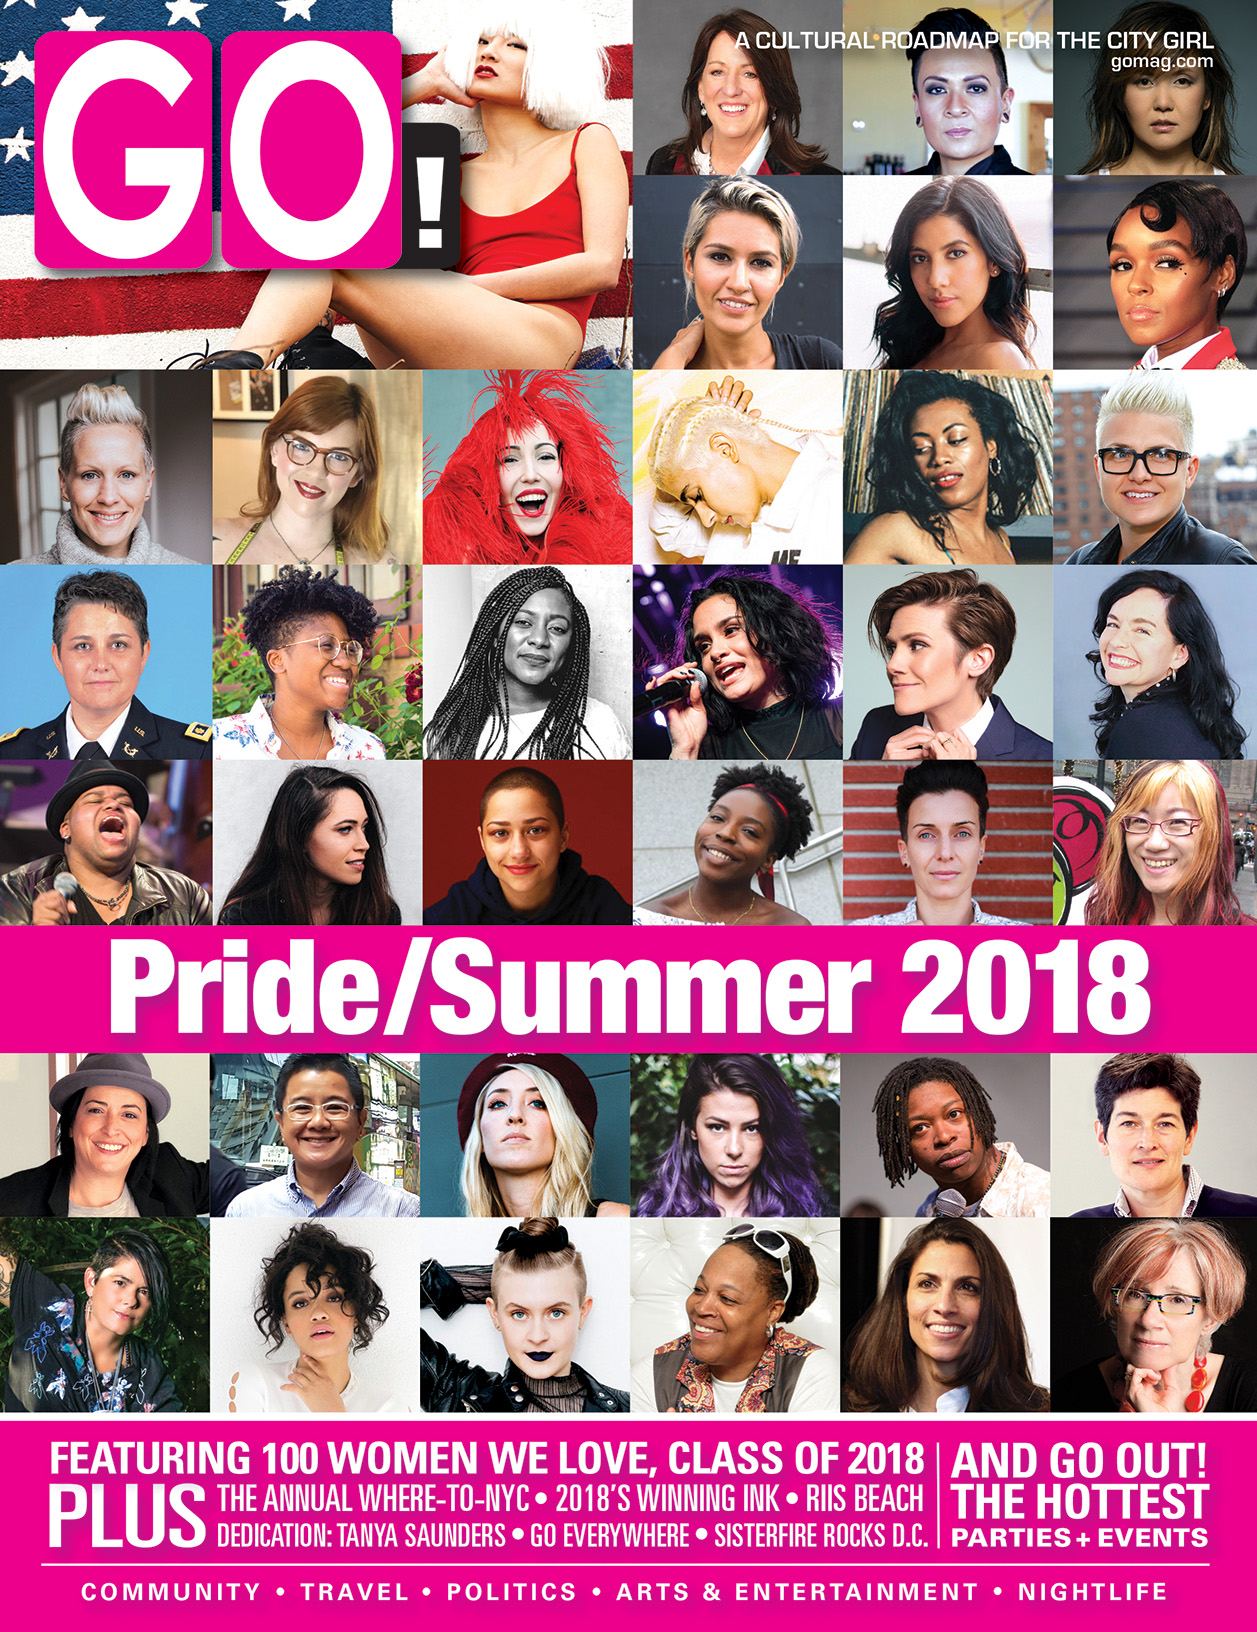 100 Women We Love Class Of 2018 Go Magazine